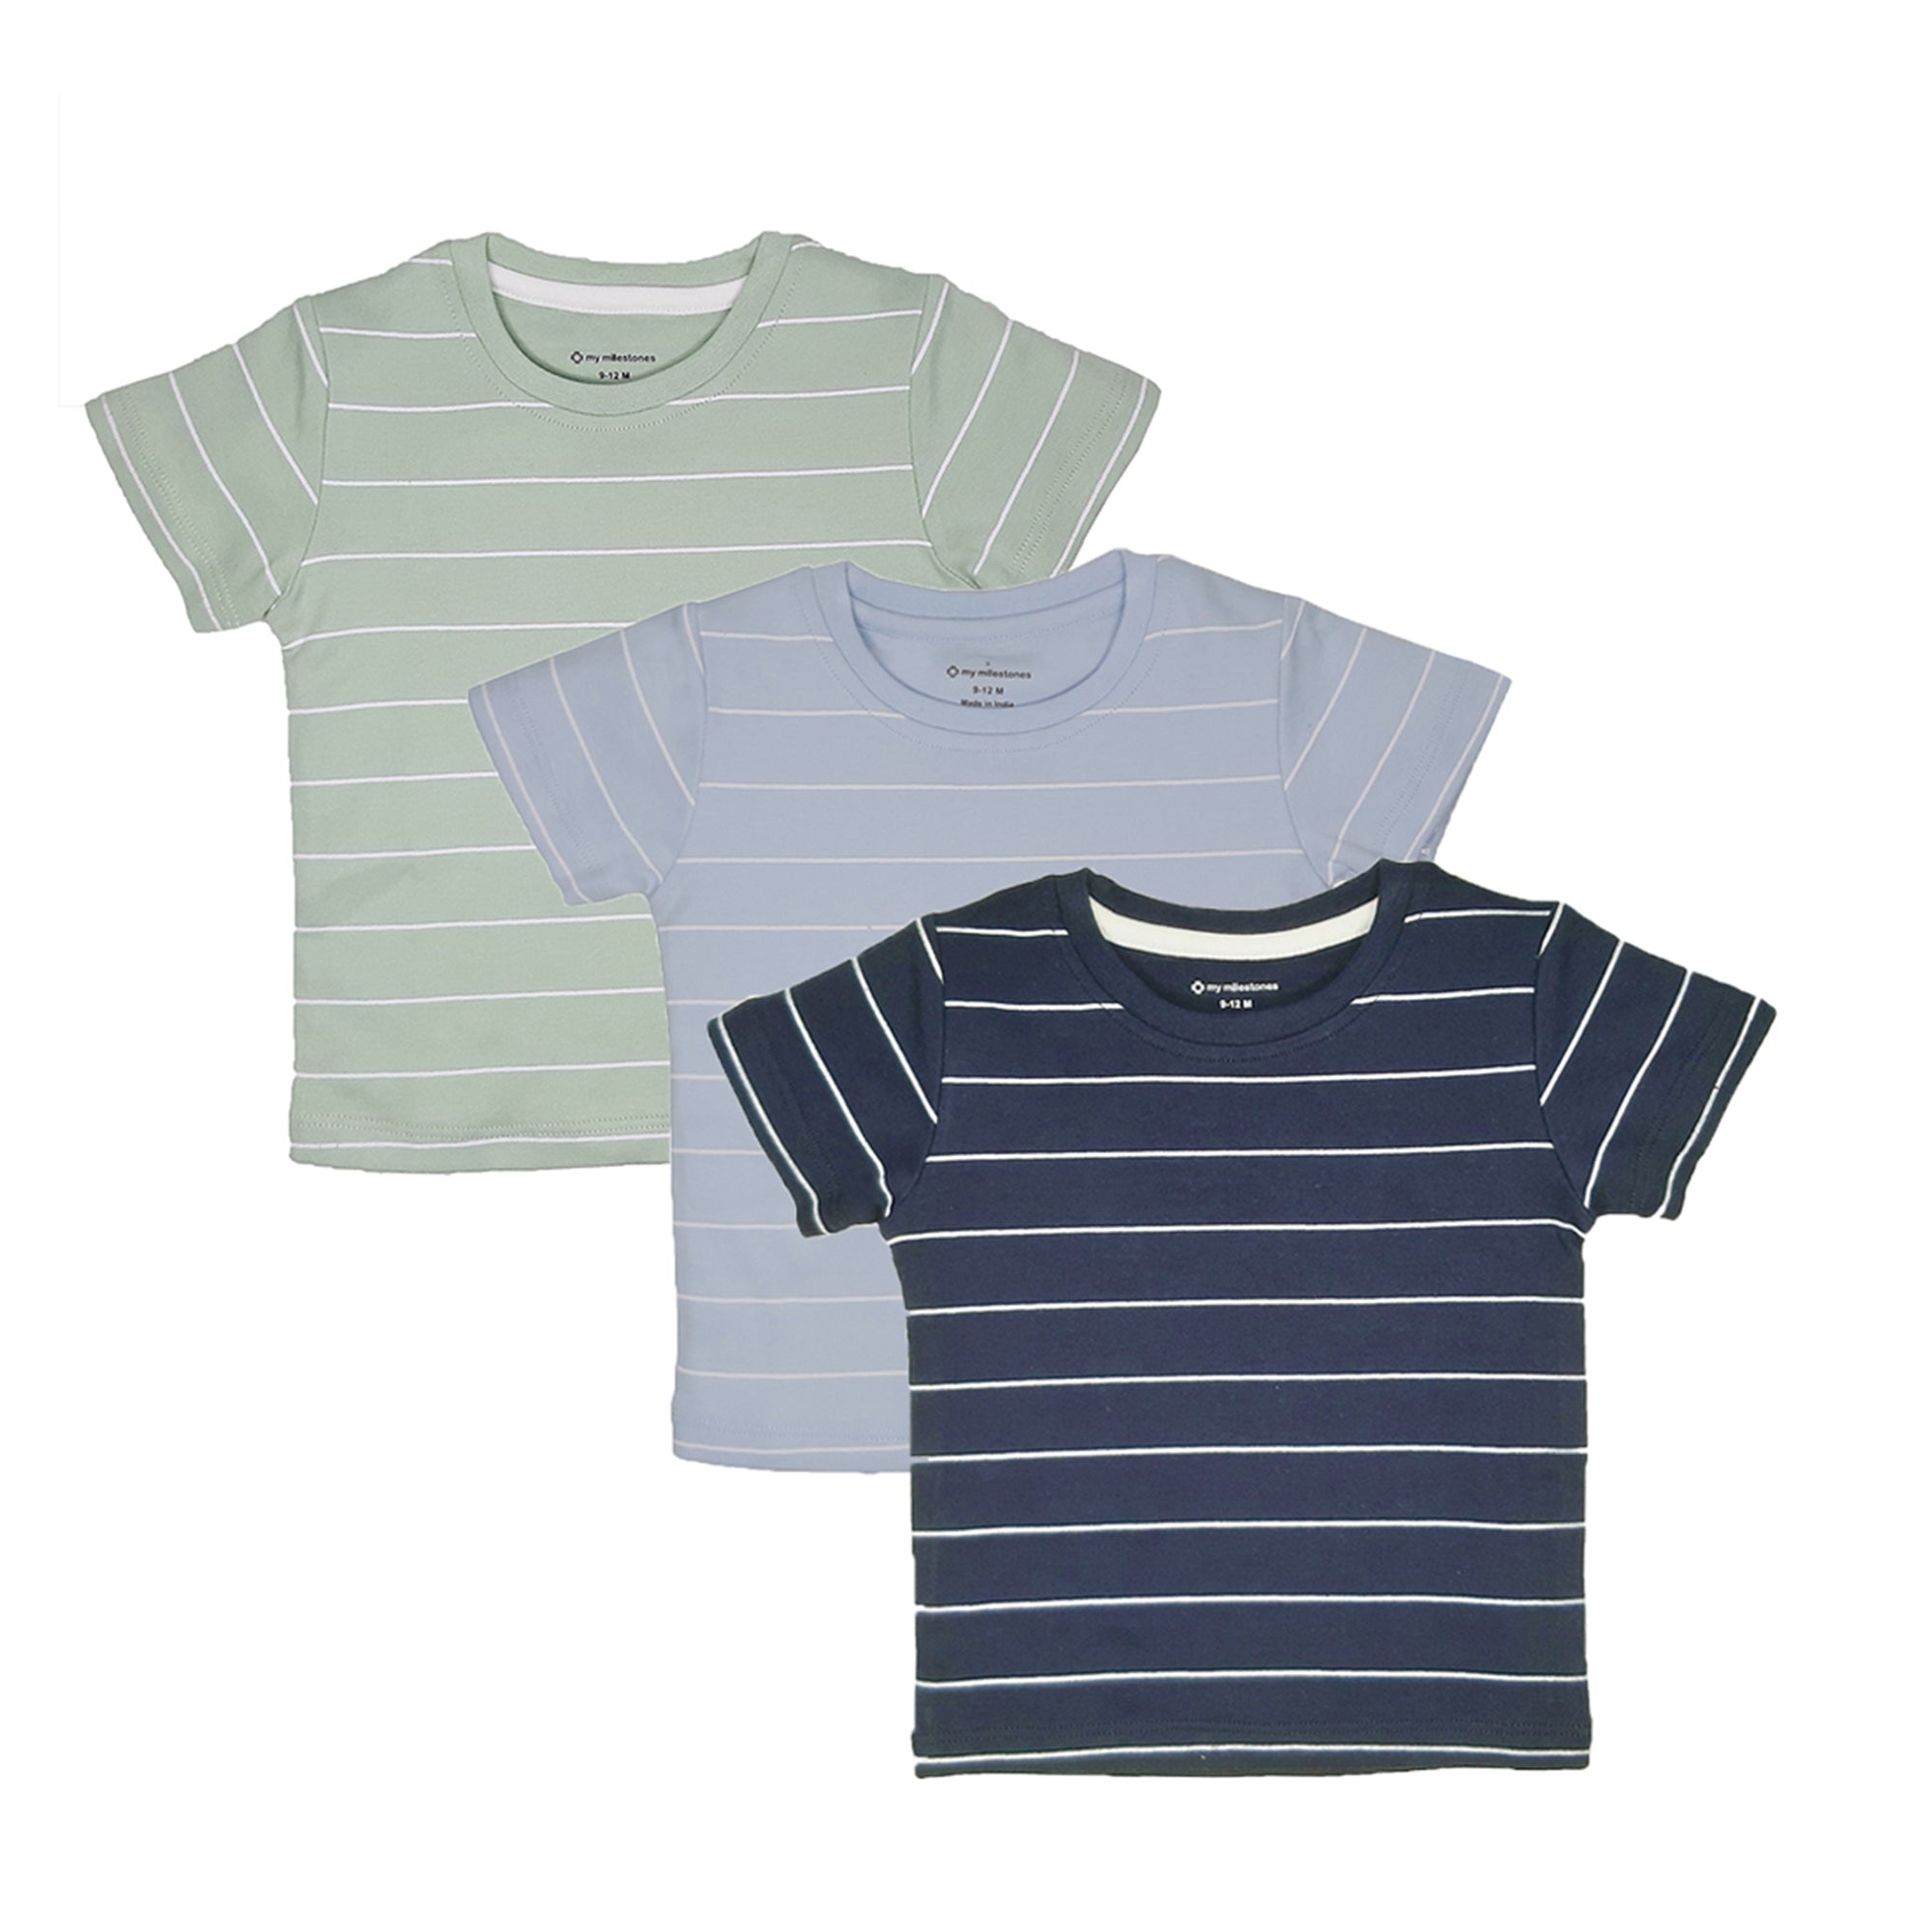 My Milestones Round Neck T-Shirt HS Stripes N. Blue / B. Blue / S. Green - 3 Pc Pack